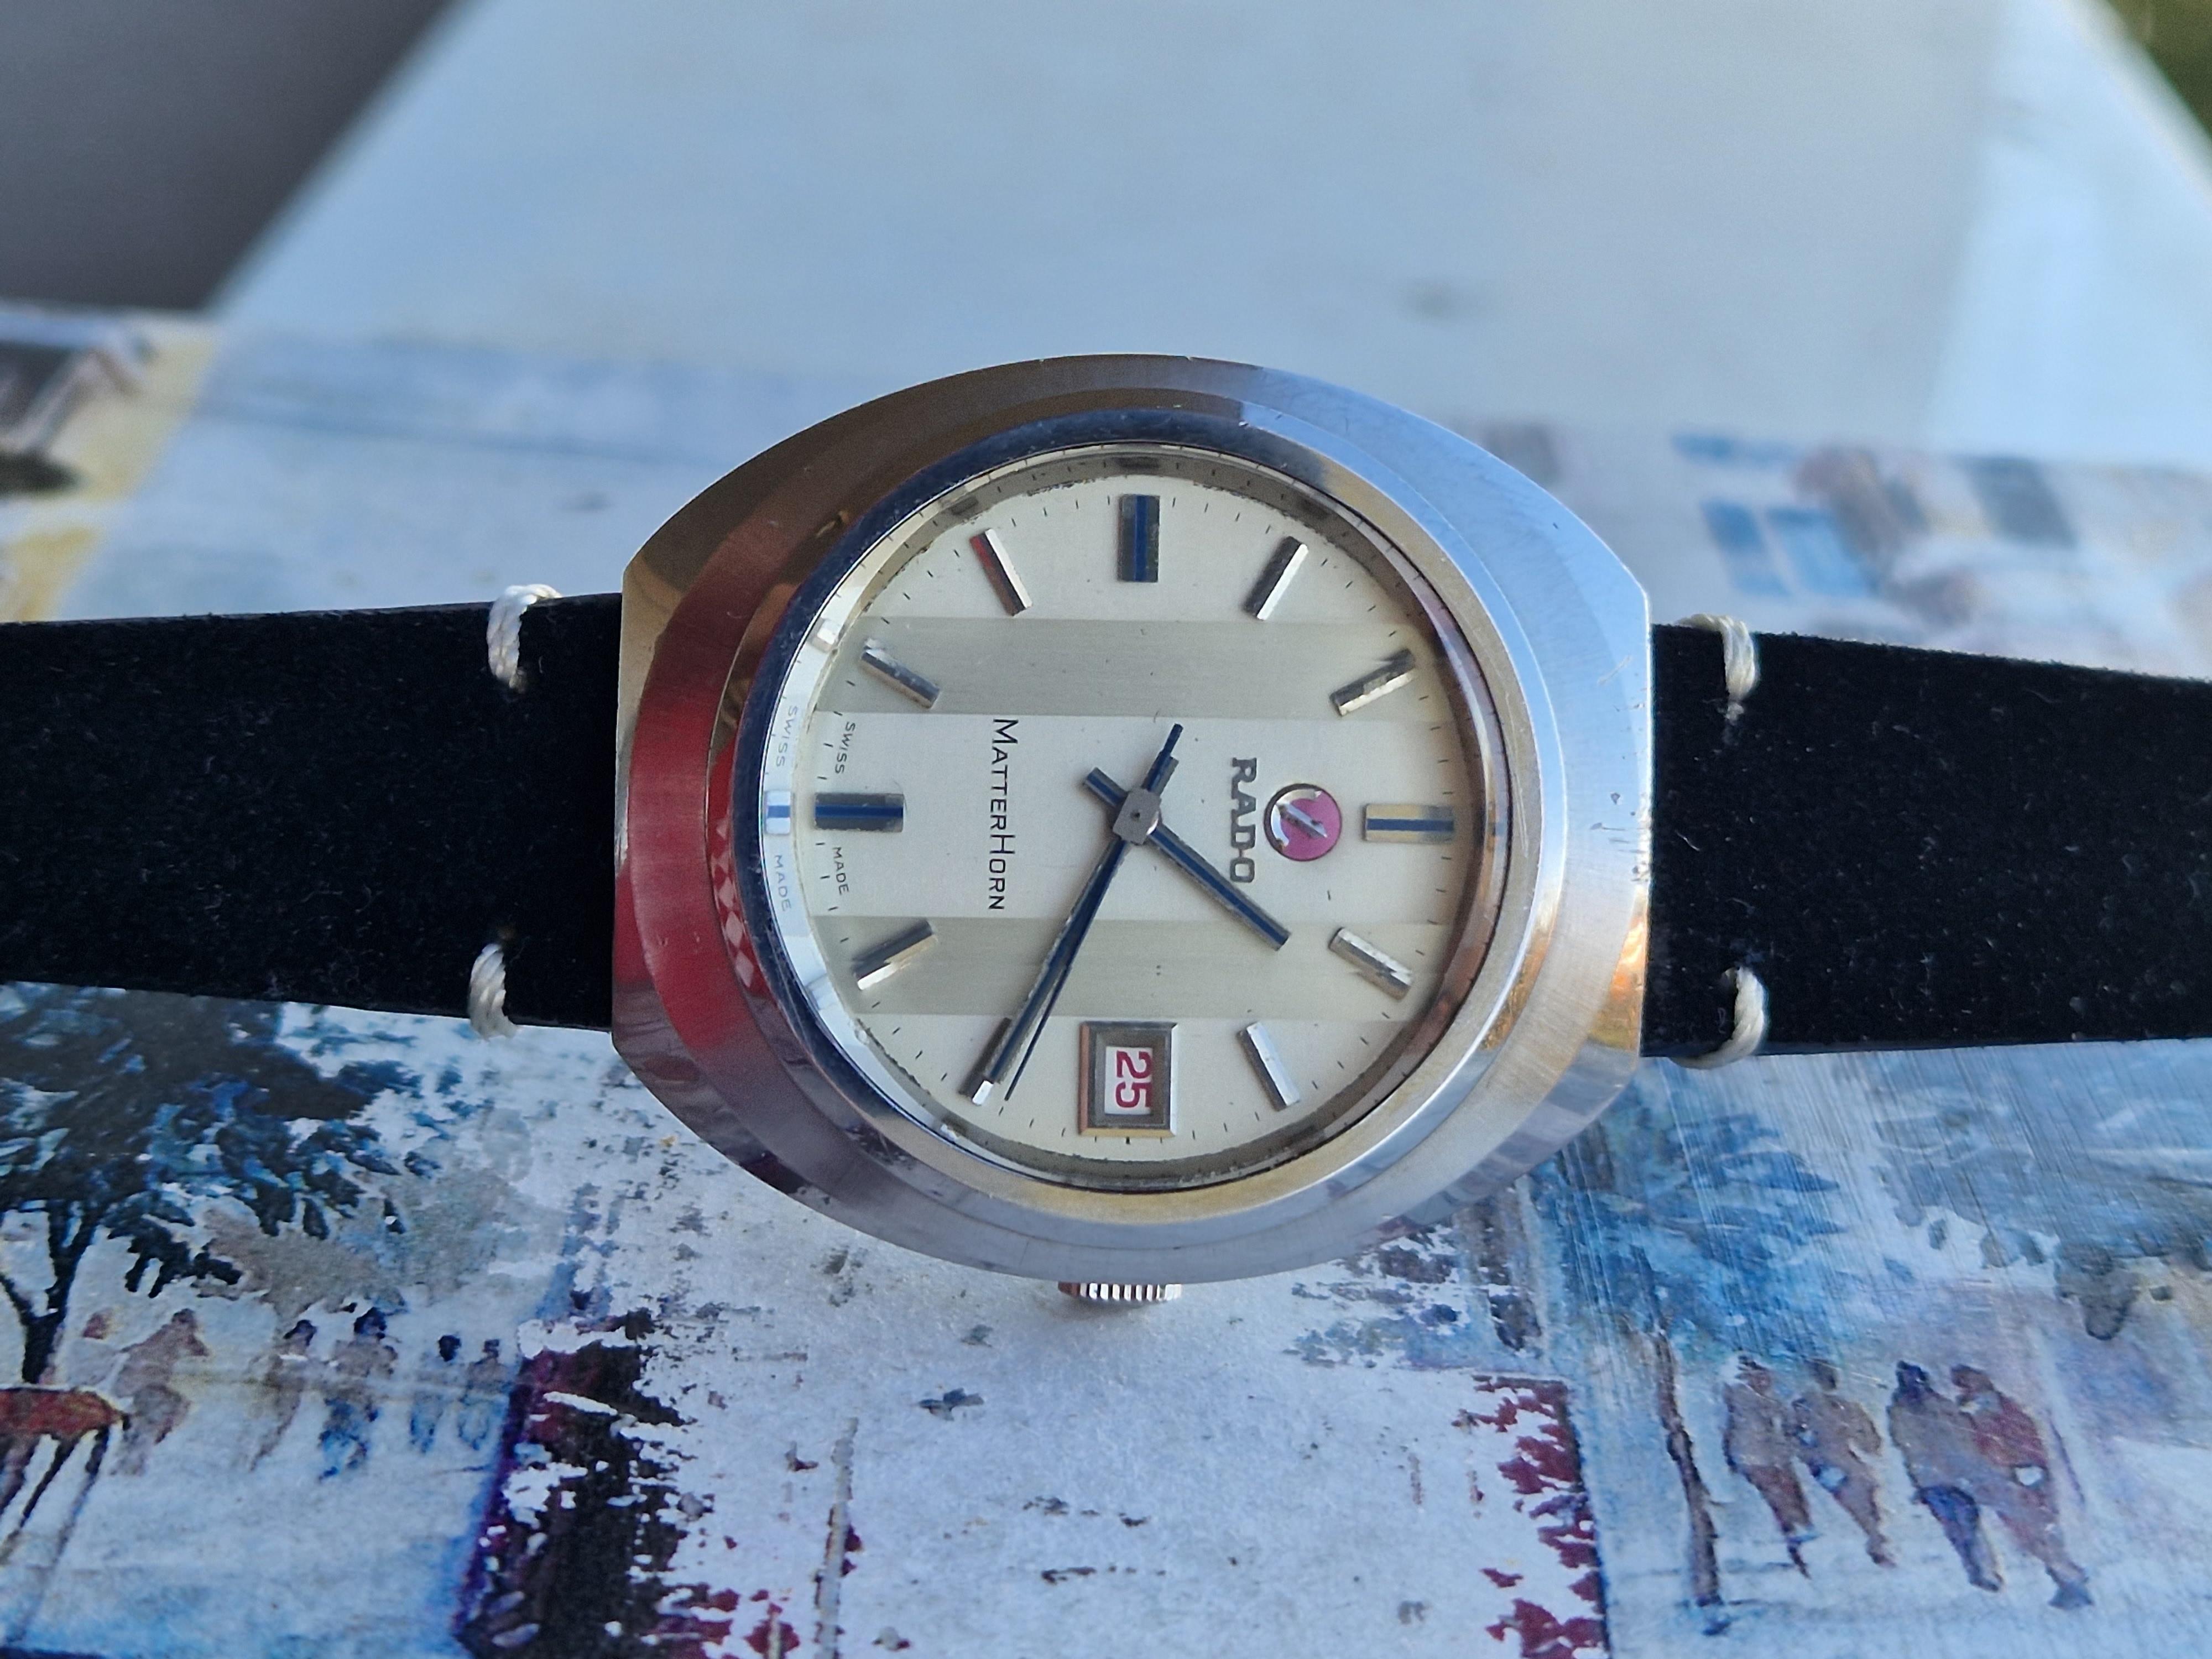 WTS] Rado MatterHorn Automatic Swiss men's watch - 175 ...